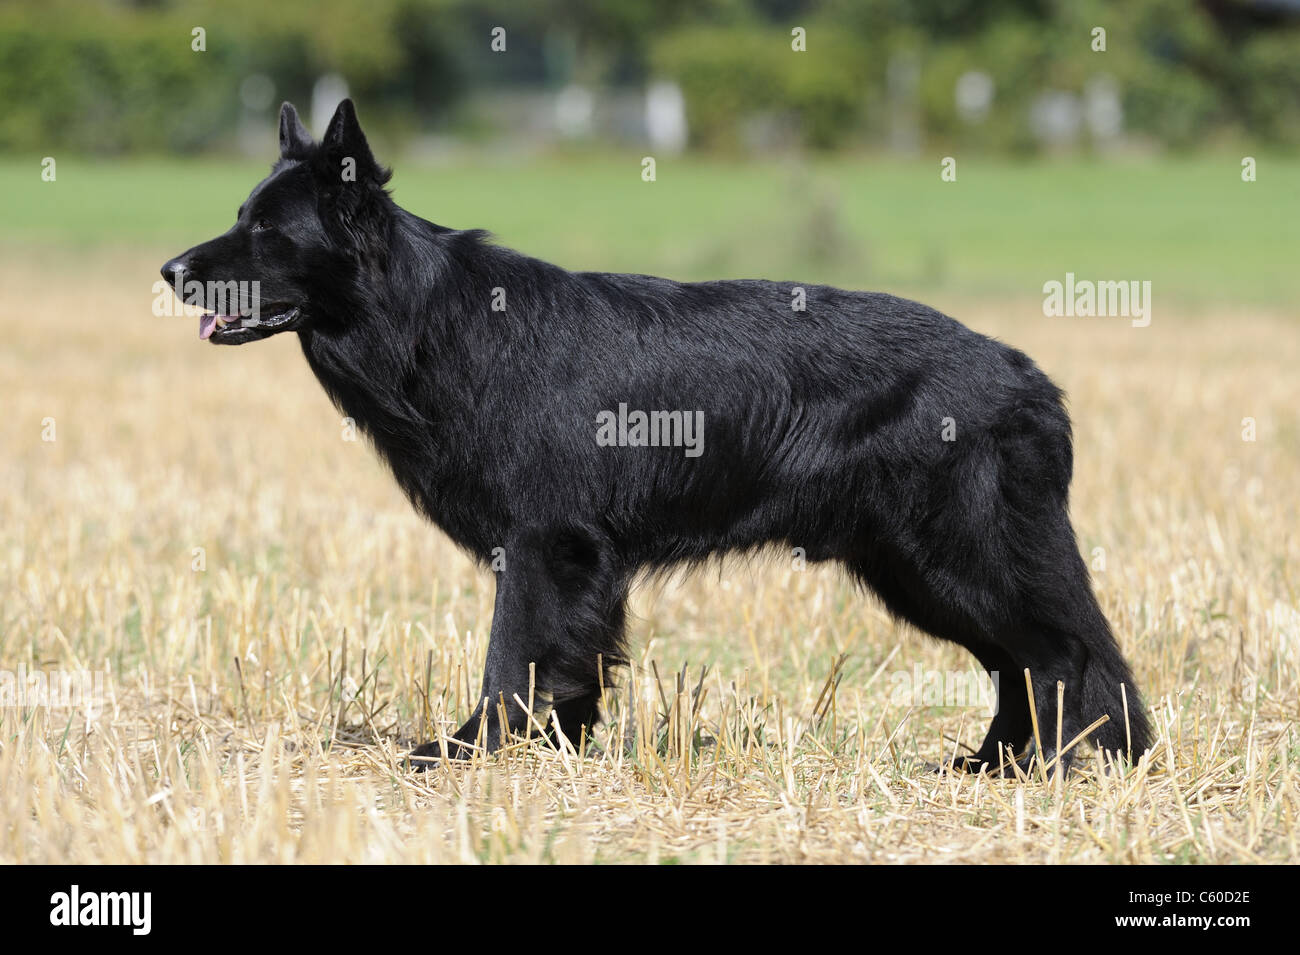 German Shepherd Dog, Alsatian (Canis lupus familiaris). Black male standing on a stubble field. Stock Photo